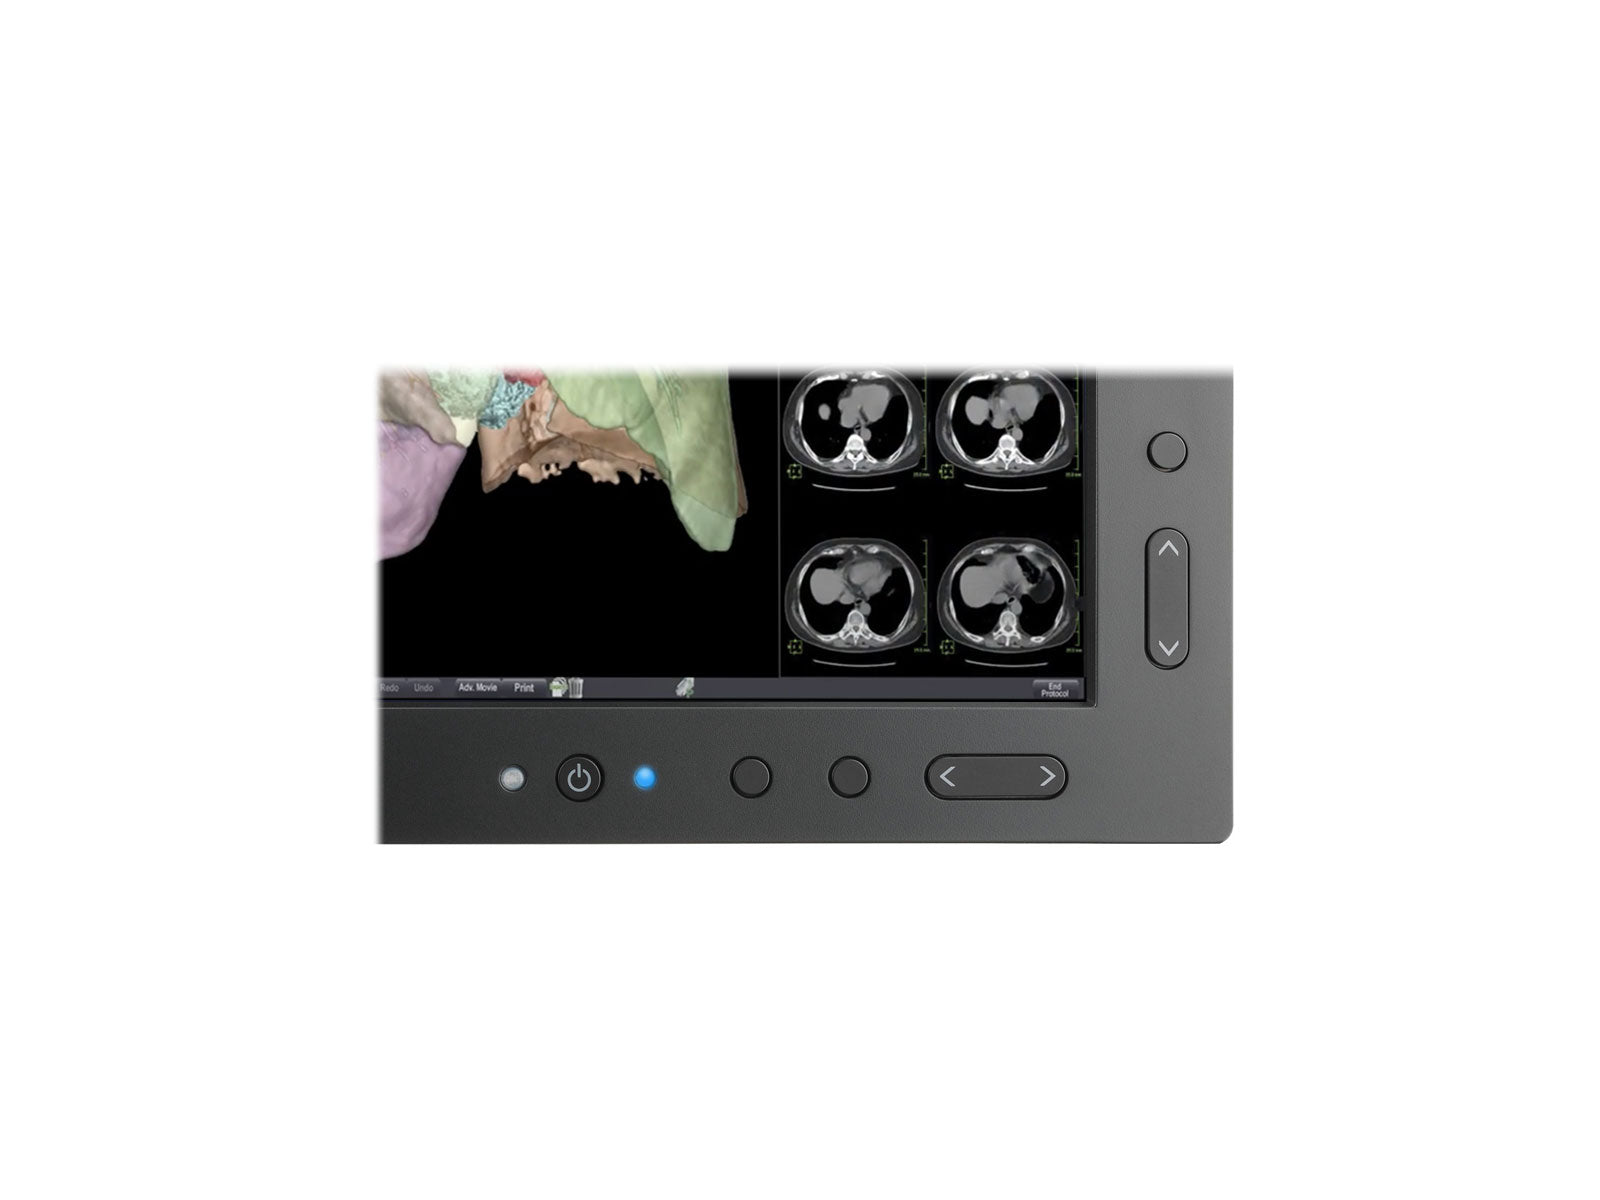 NEC MultiSync MD301C4 4MP 30" General Radiology PACS Display (MD301C4) Monitors.com 